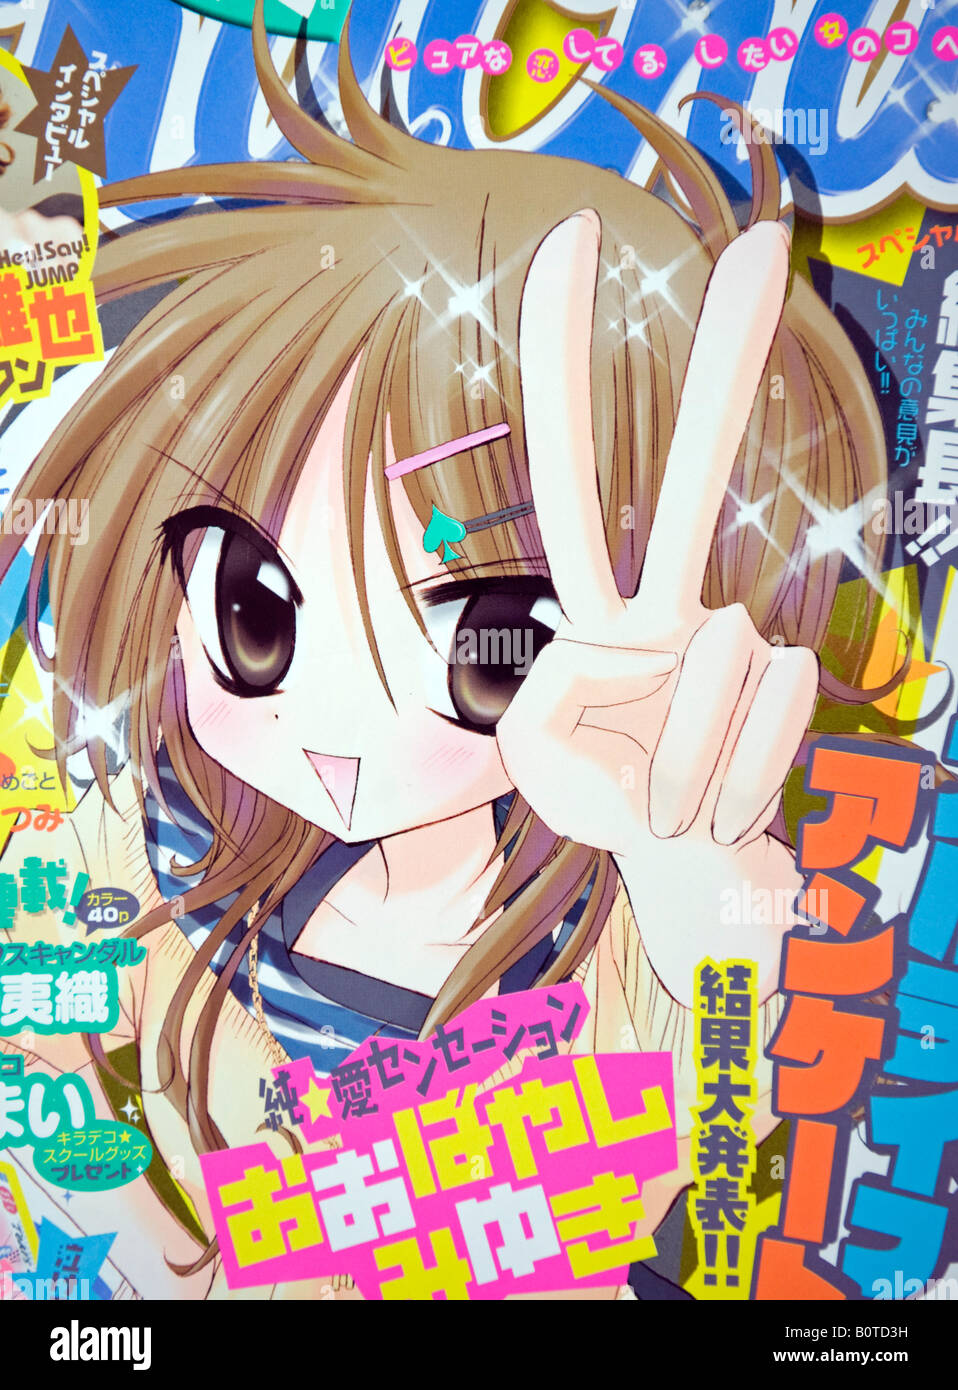 Cover artwork of Japanese manga comic book in Japan 2006 Stock Photo